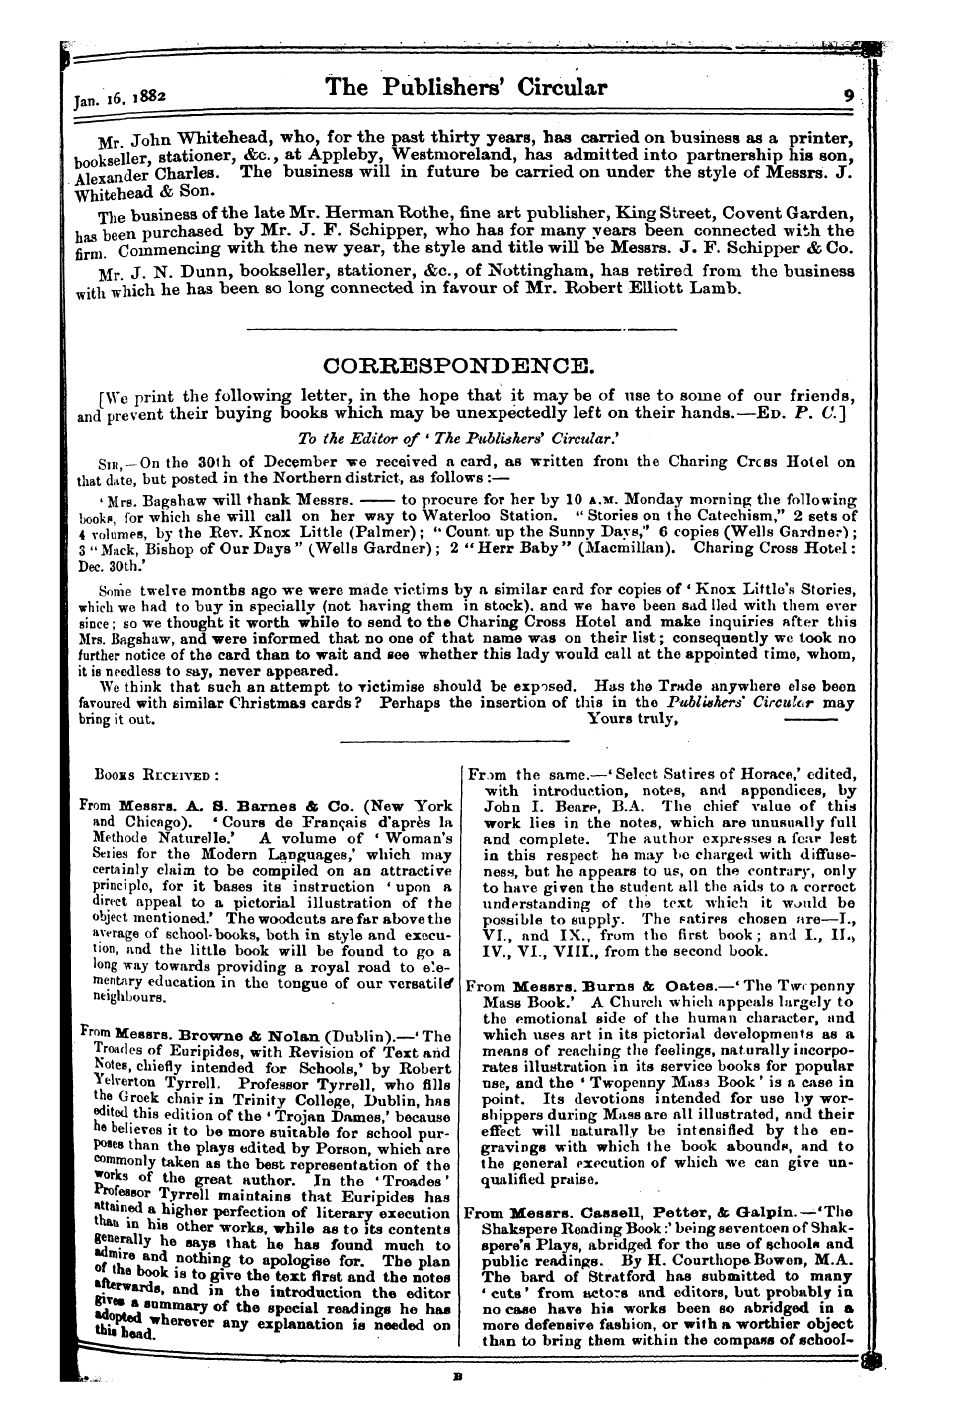 Publishers’ Circular (1880-1890): jS F Y, 1st edition - Tvio "Pnvwlievi ^I^I' ^Liv^Iilo-N